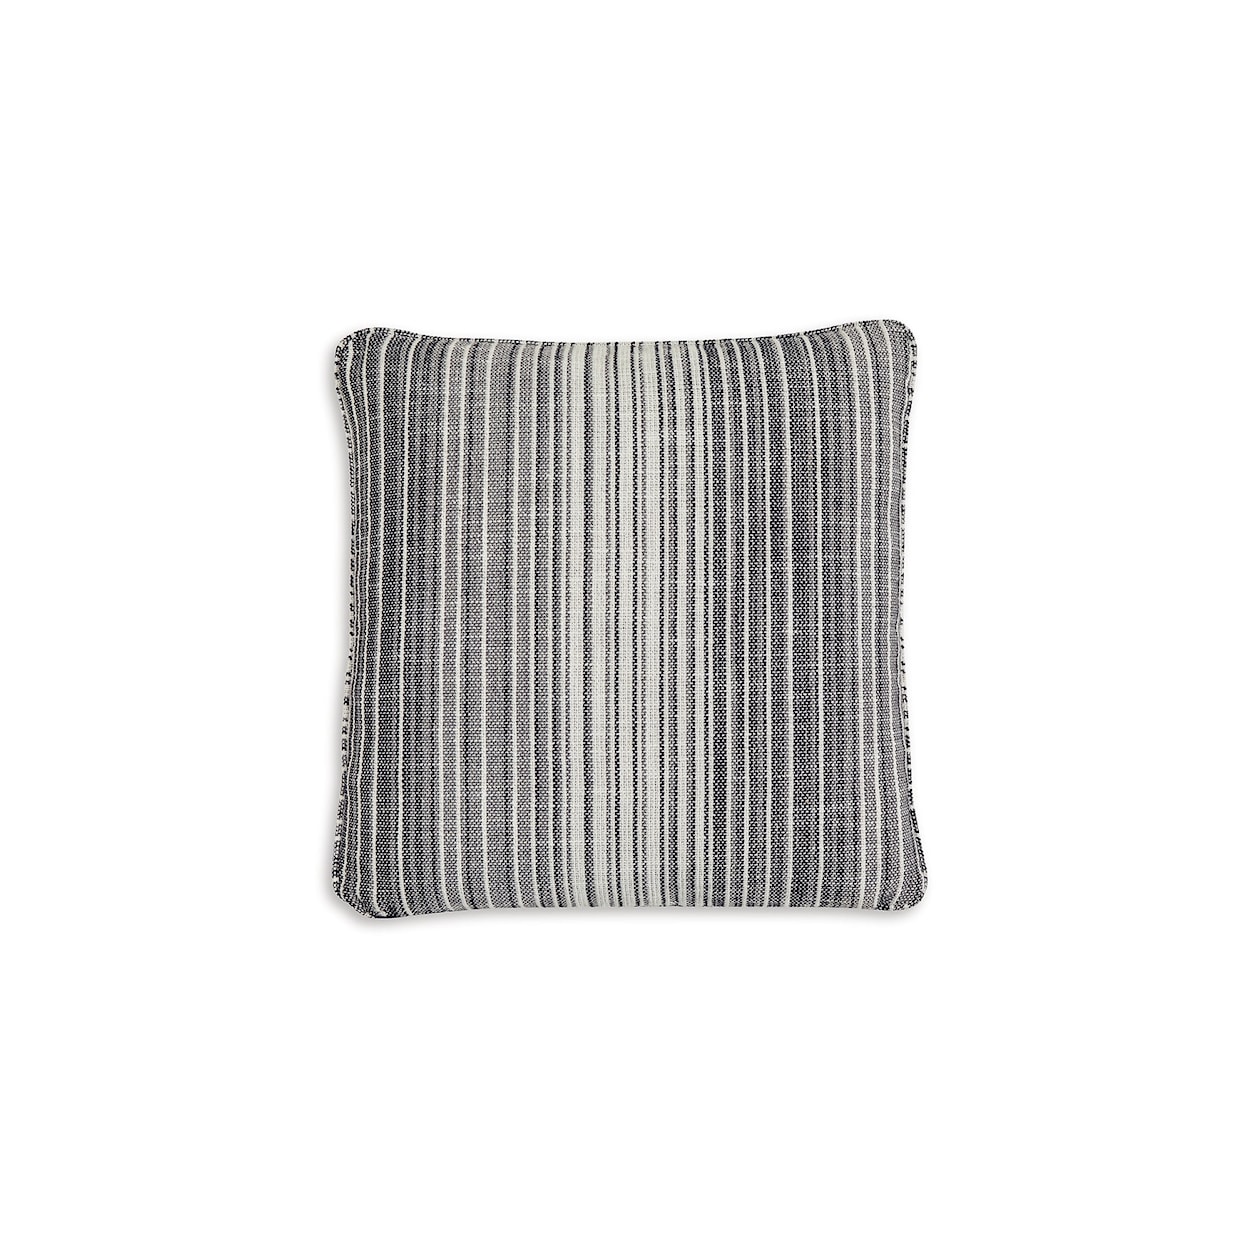 Ashley Furniture Signature Design Chadby Next-Gen Nuvella Pillow (Set of 4)